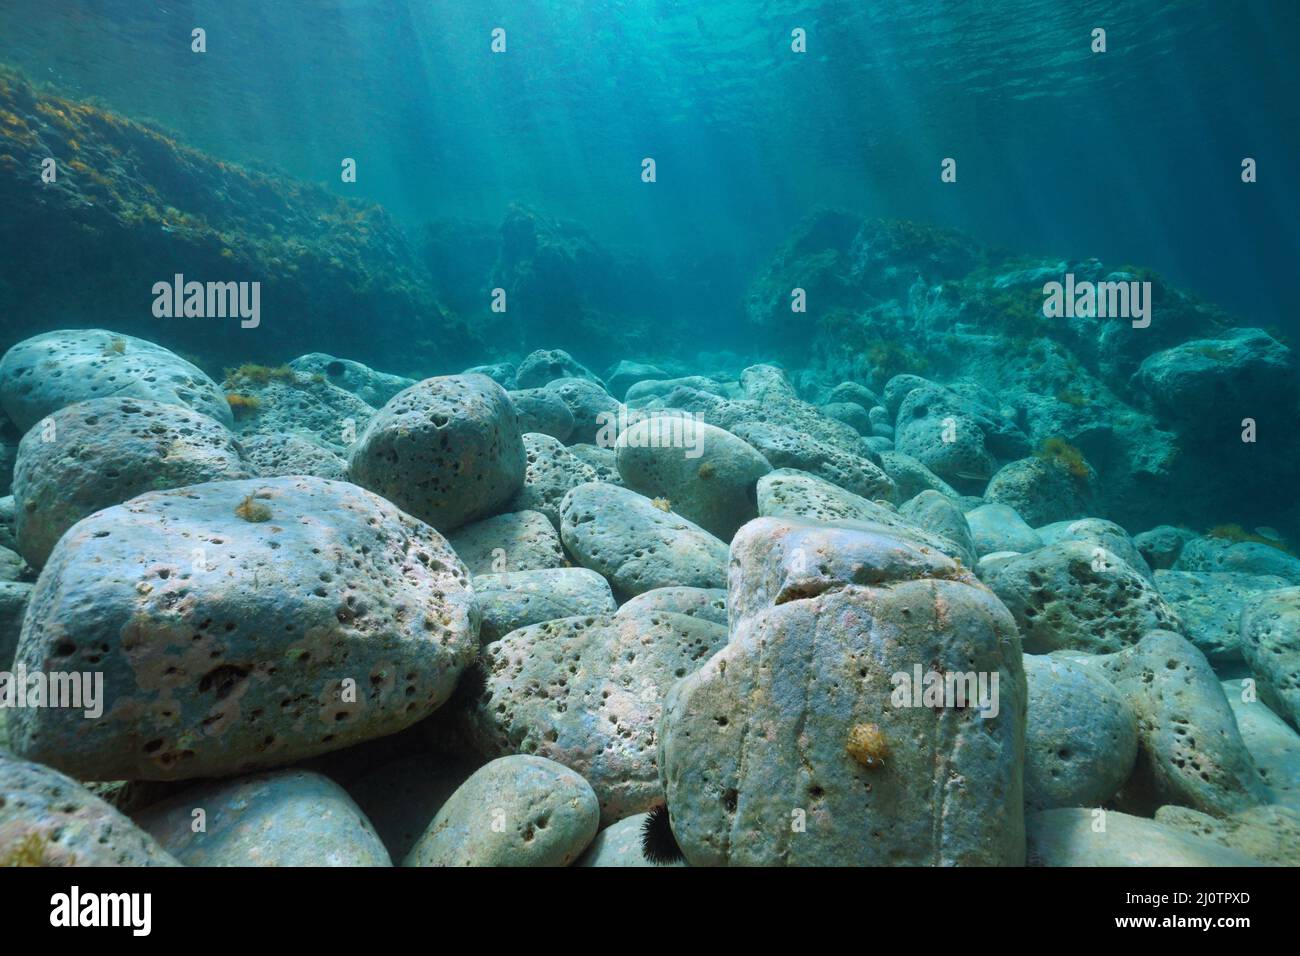 Rocky seabed, rocks underwater in the Mediterranean sea, Spain Stock Photo